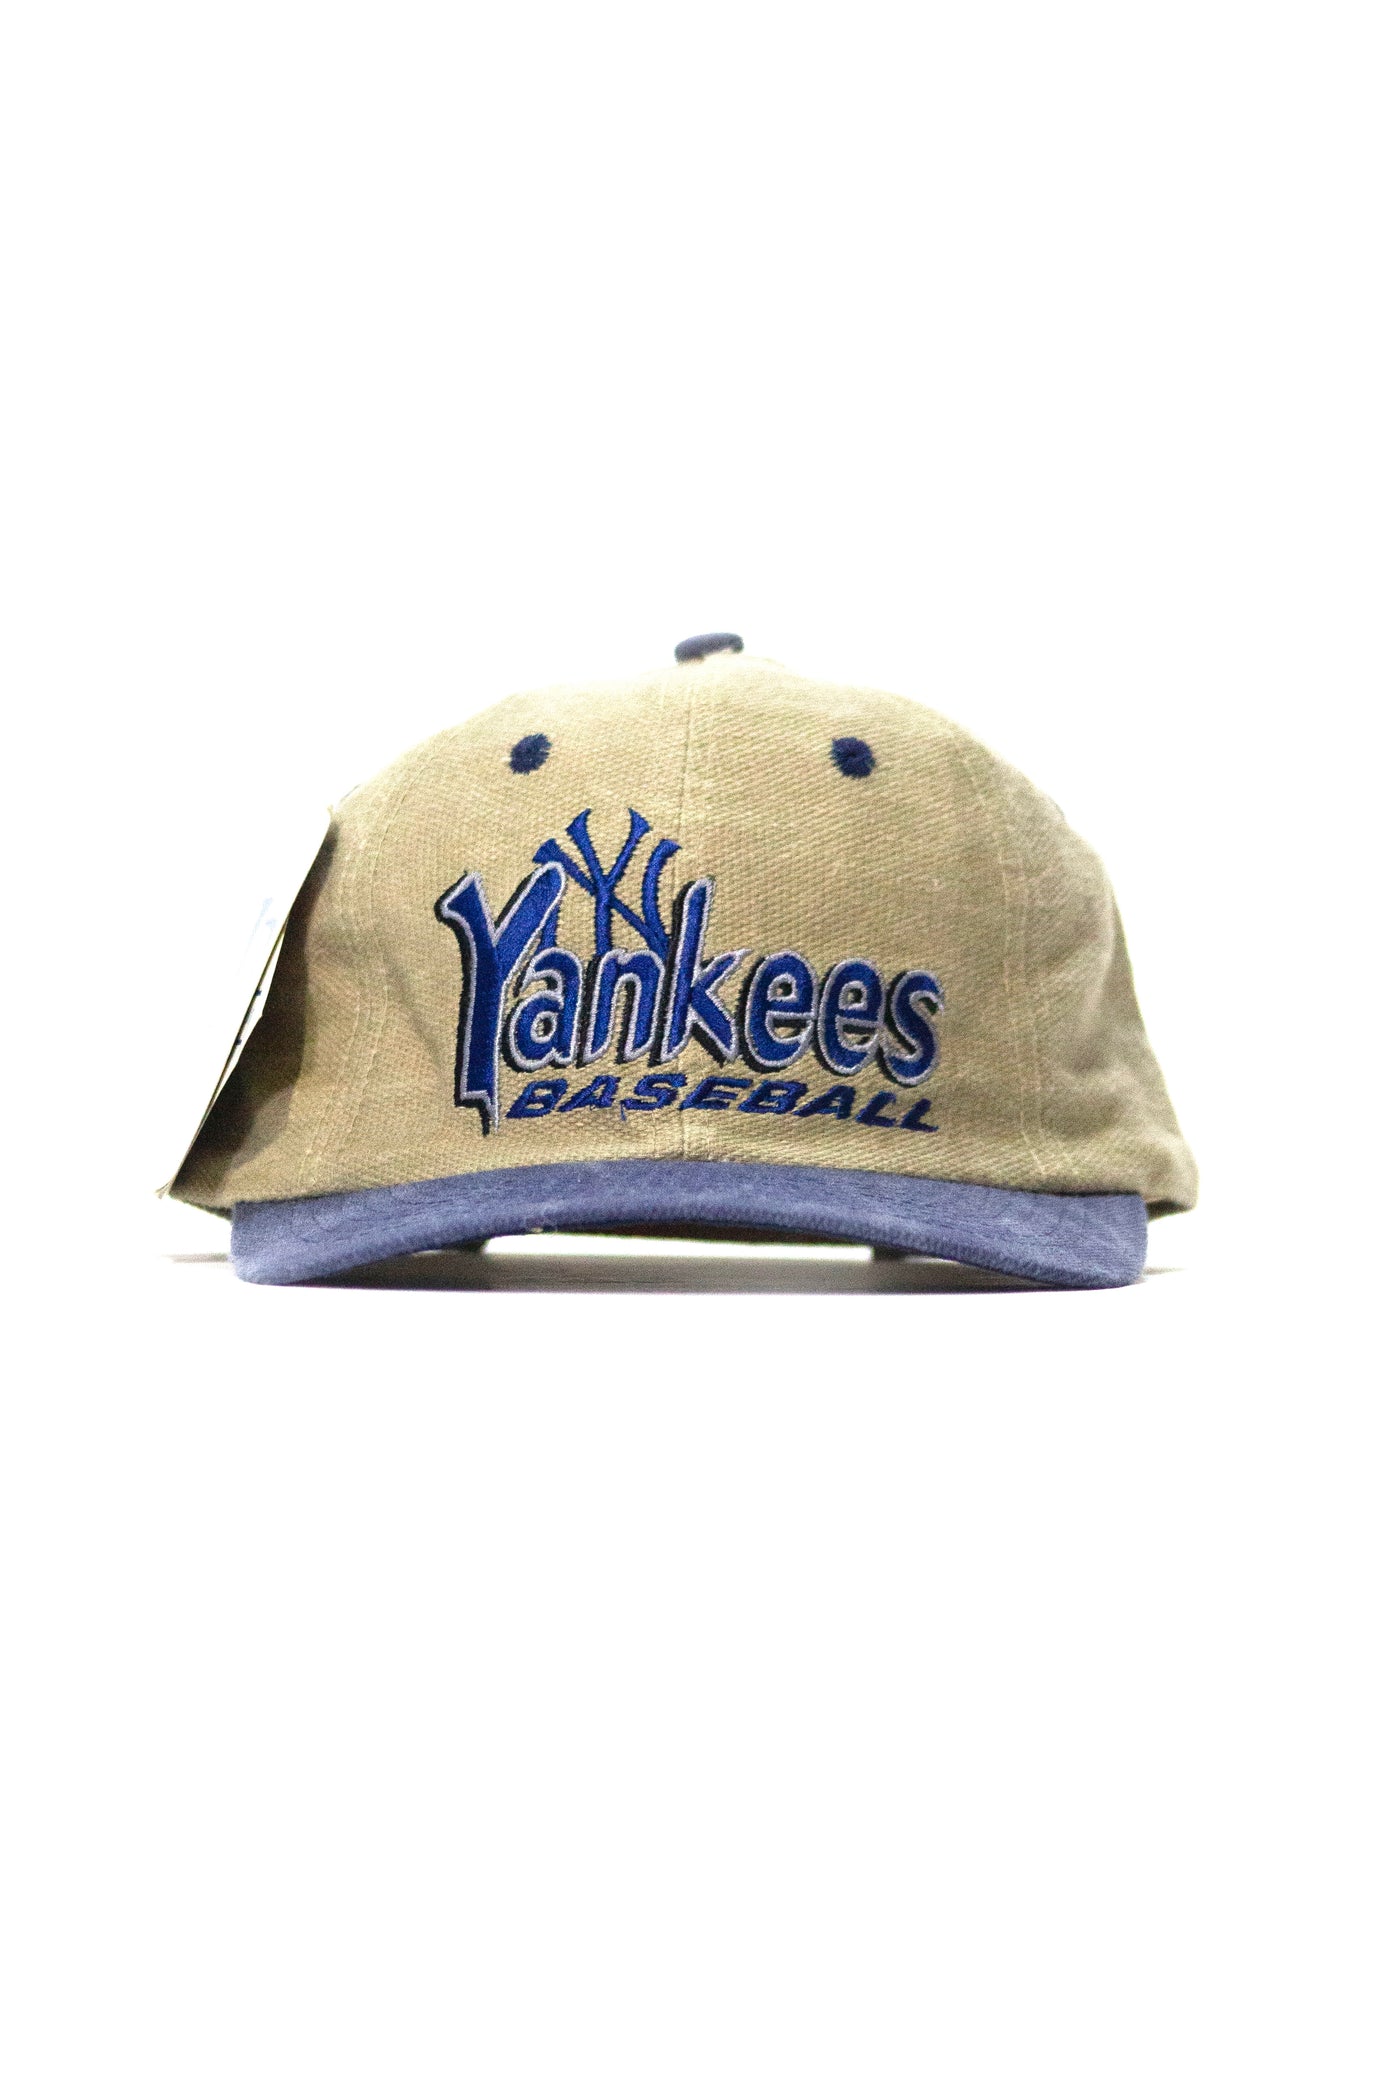 Vintage 90s New York Yankees Leather Strapback Hat